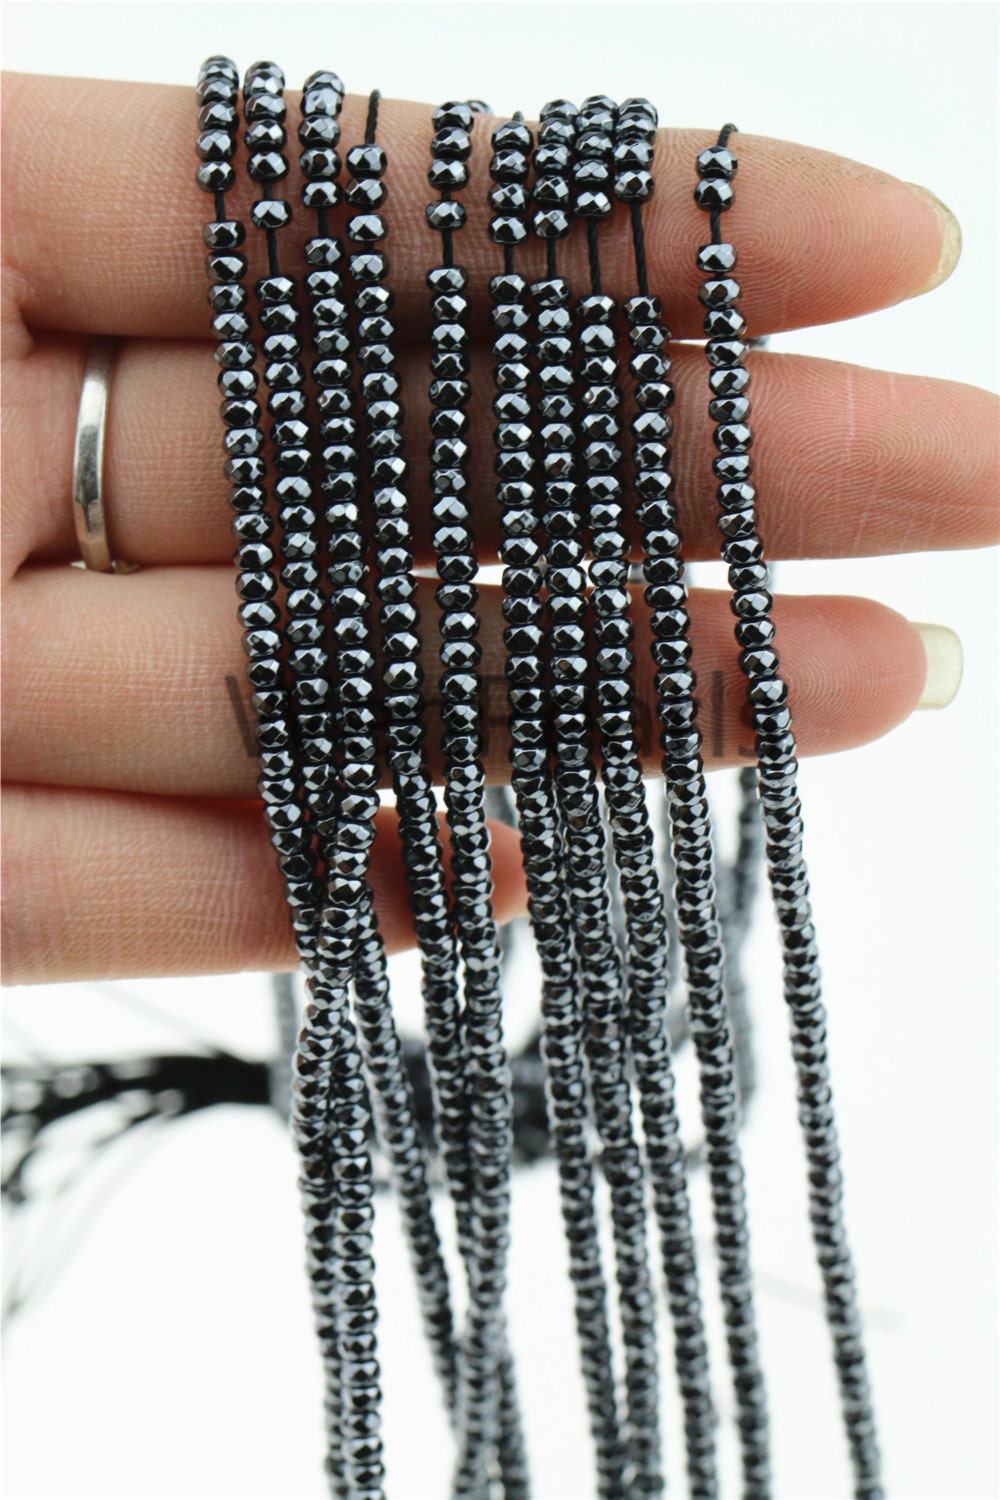 Black Hematite Beads, Round Smooth 2mm 3mm 4mm 6mm 8mm 10mm 12mm Black  Beads, Small and Big Hematite Gemstone Beads, Full Strand HMT20X0 